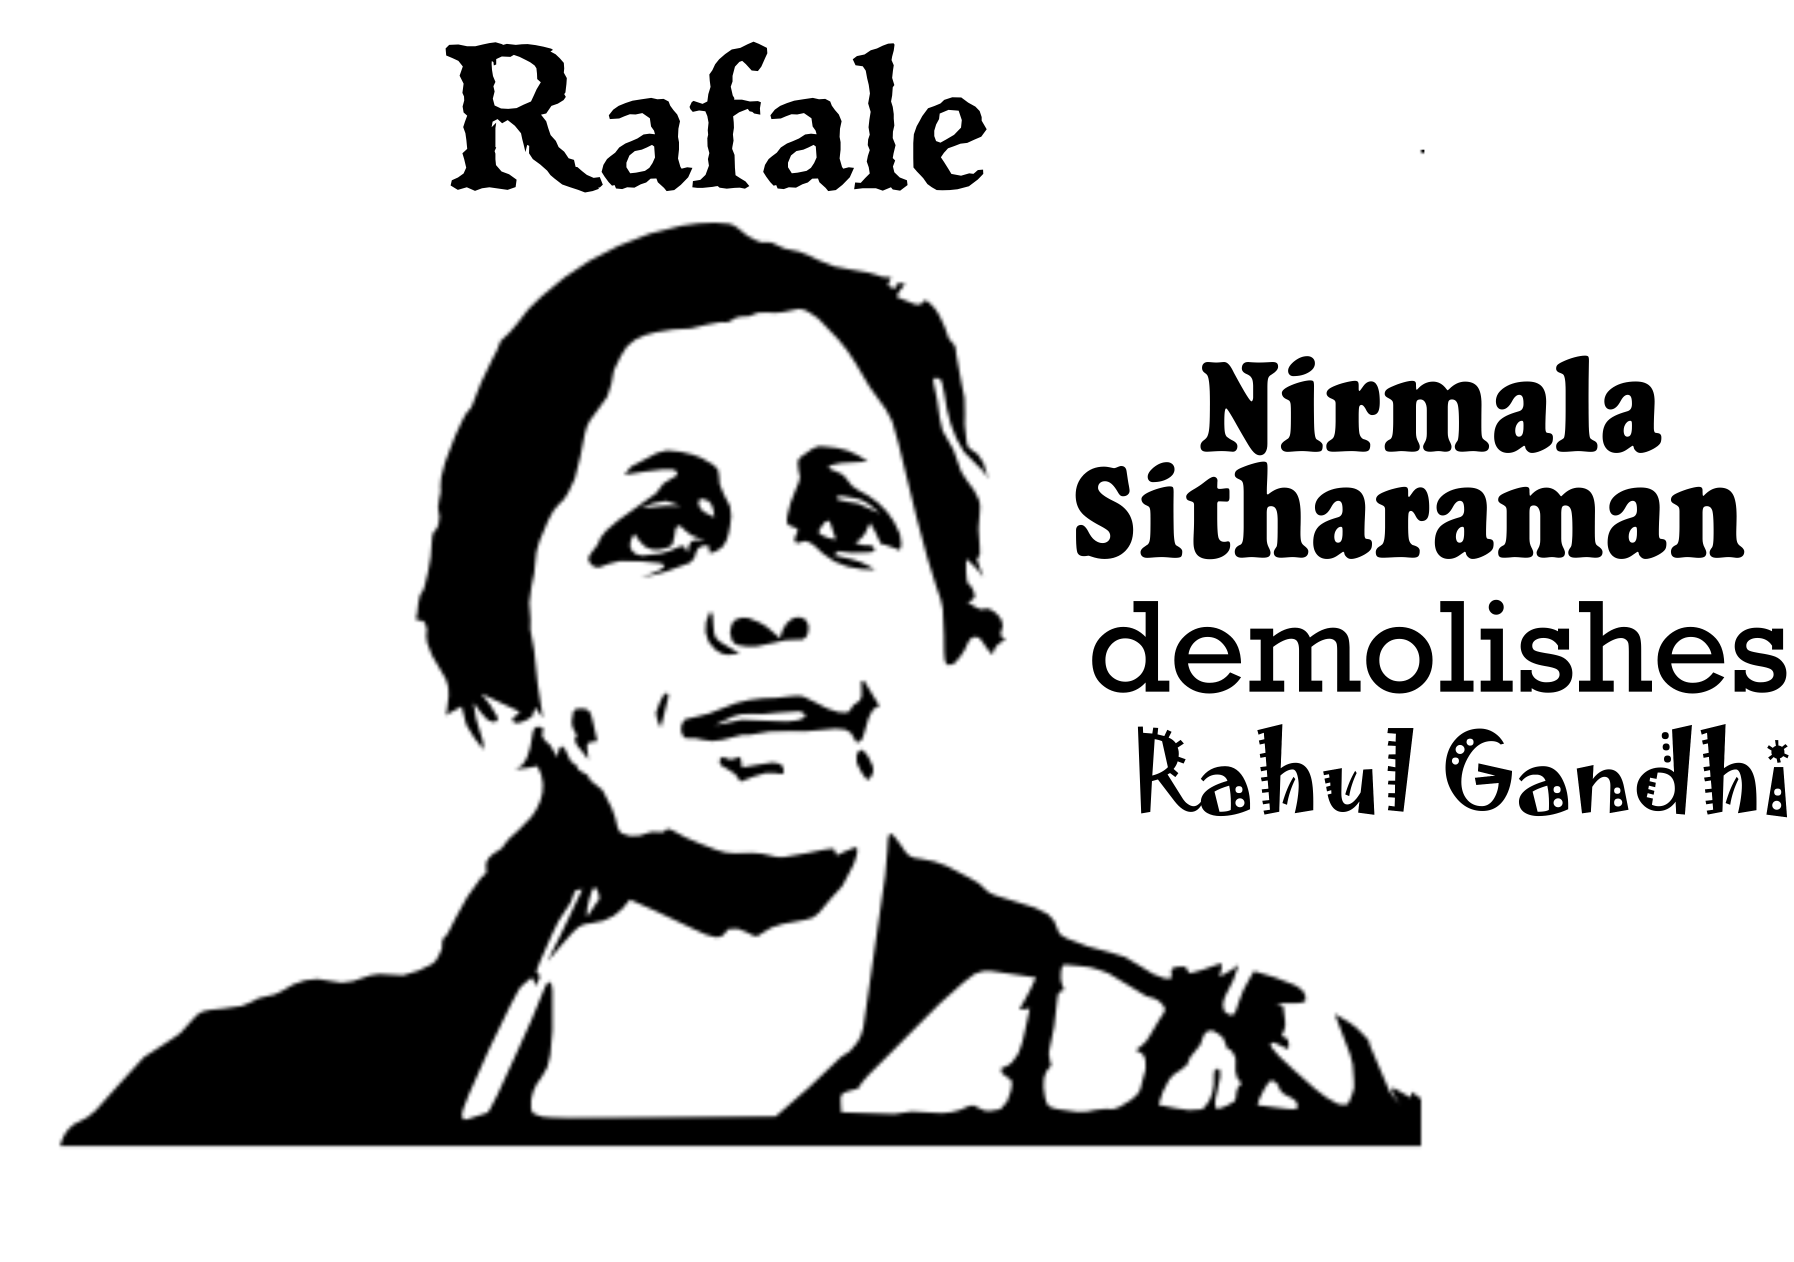 Nirmala Sitharaman Demolishes Rahul Gandhi on Rafale but his Lies continue